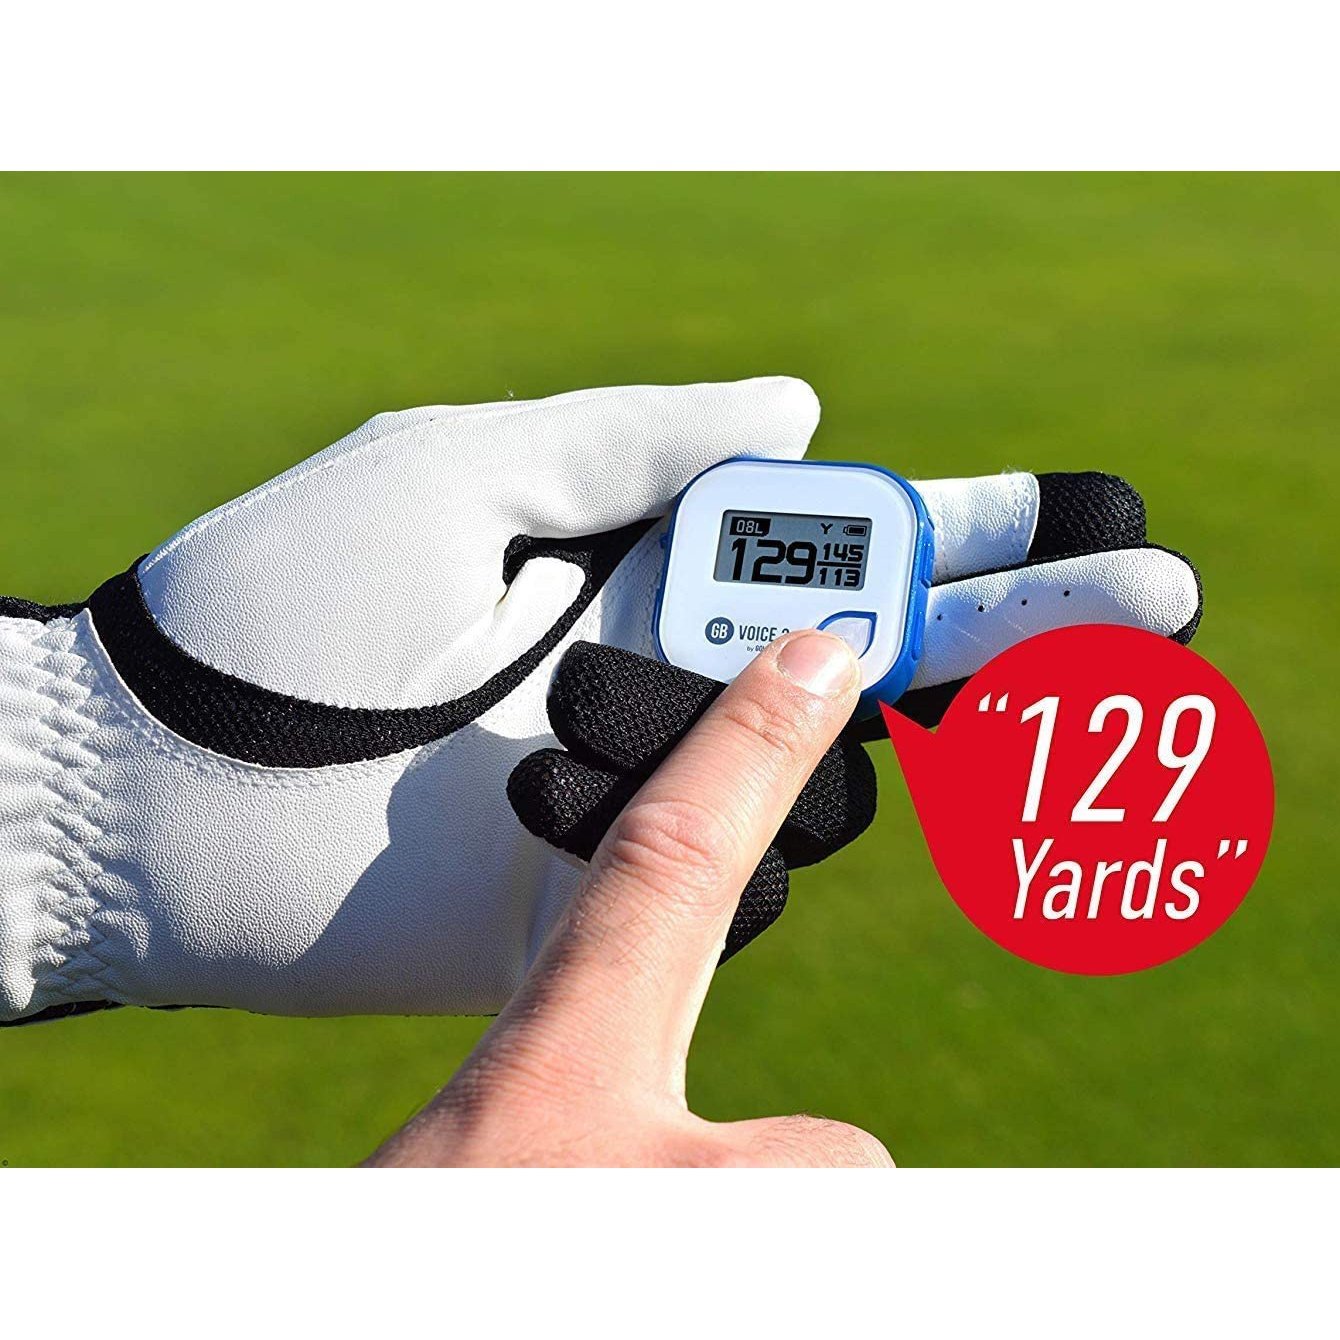 Golf Buddy Voice 2S+ Wearable Talking GPS Rangefinder